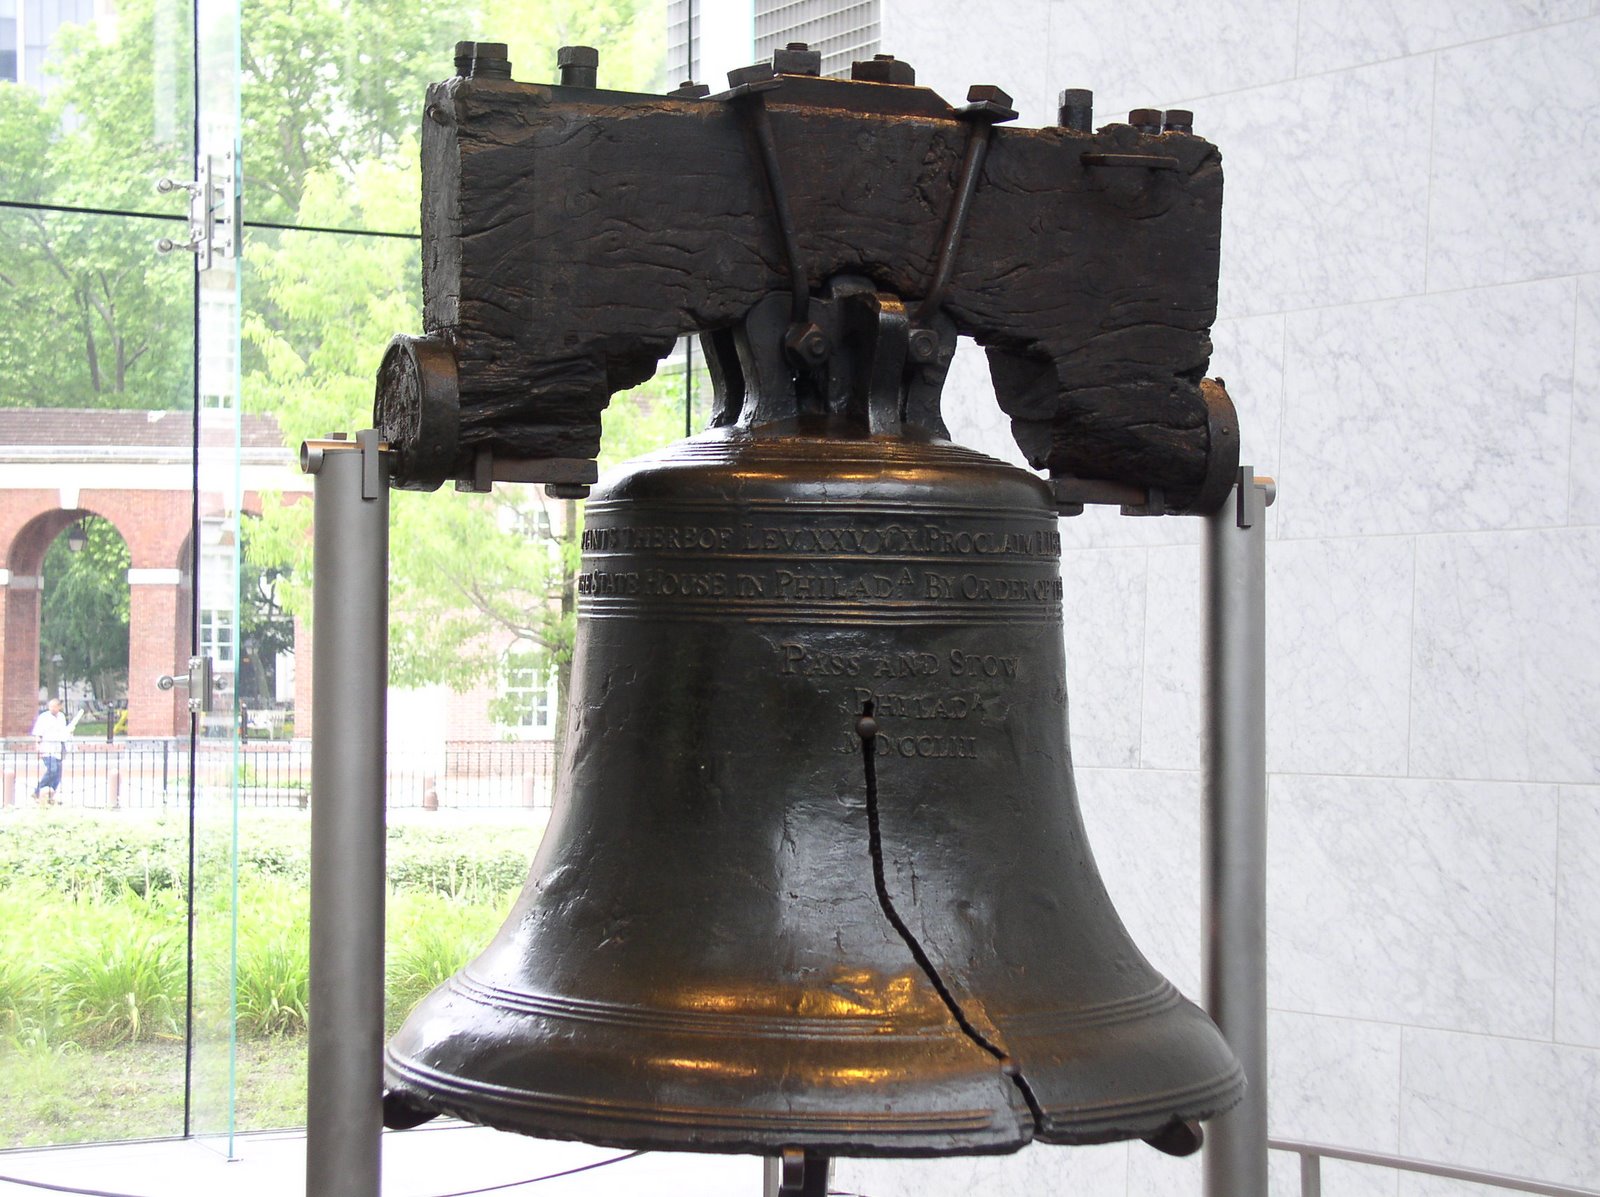 [liberty+bell.JPG]